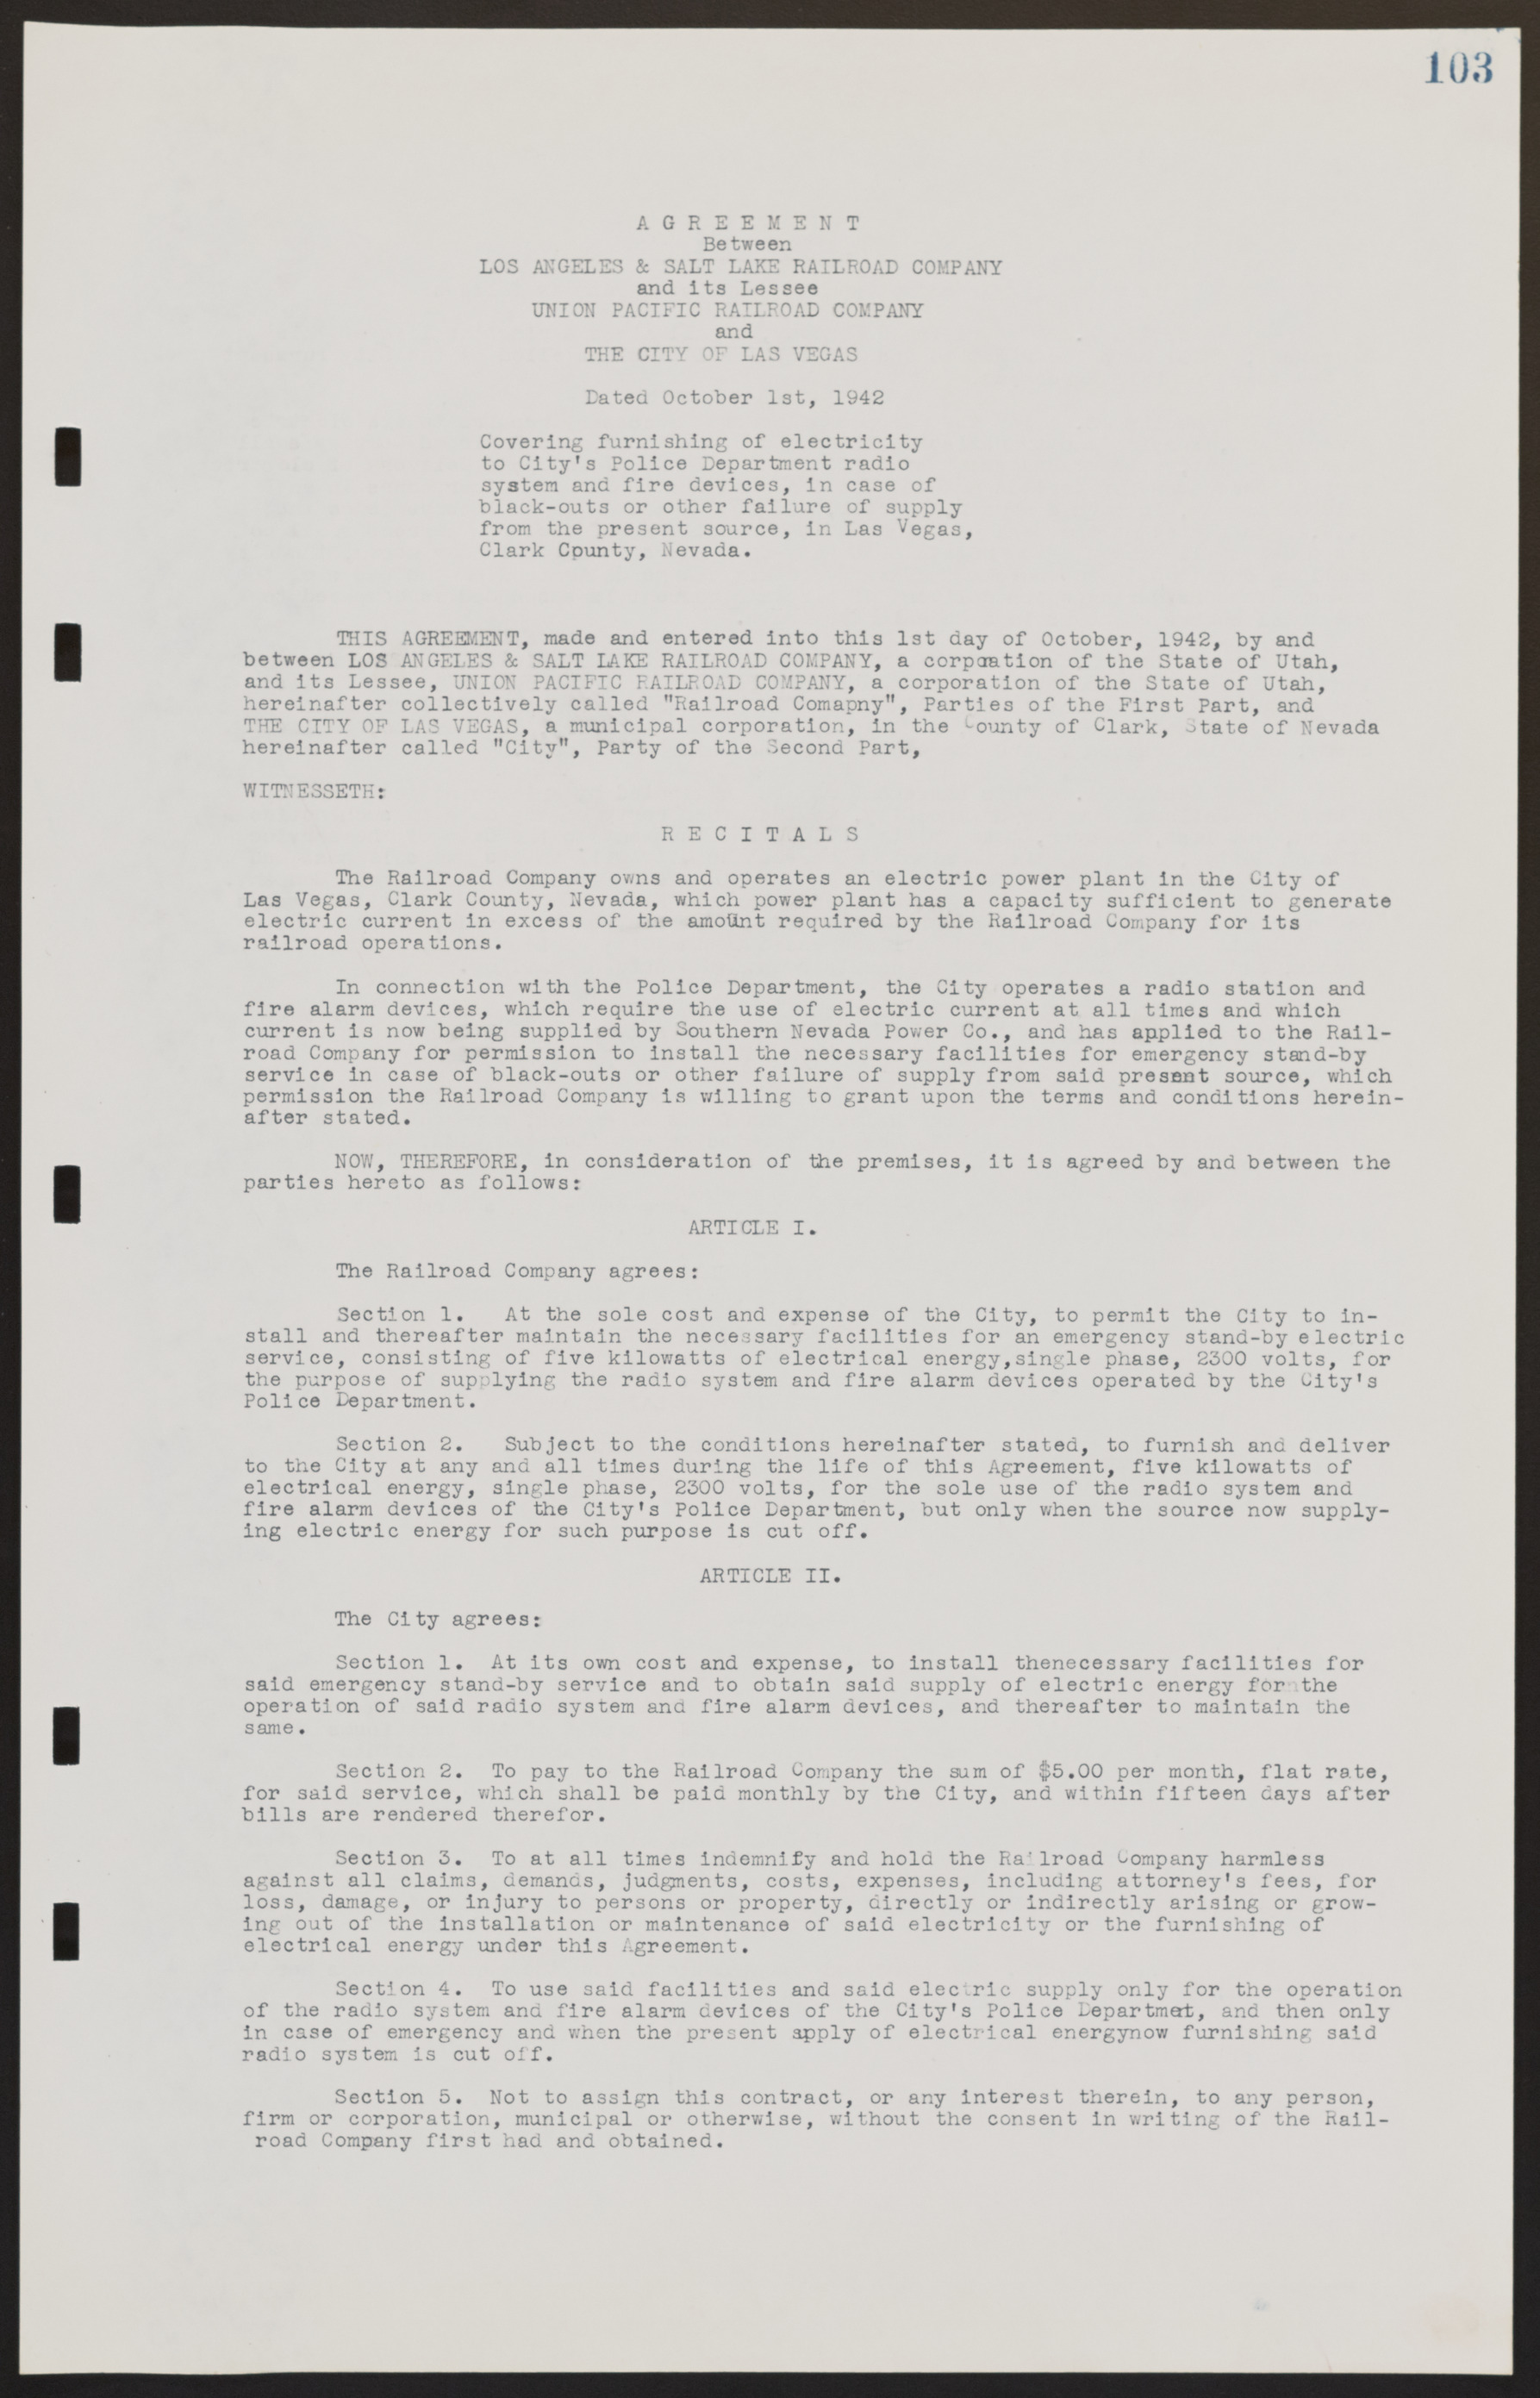 Las Vegas City Commission Legal Documents, February 29, 1944 to February 21, 1945, lvc000016-33